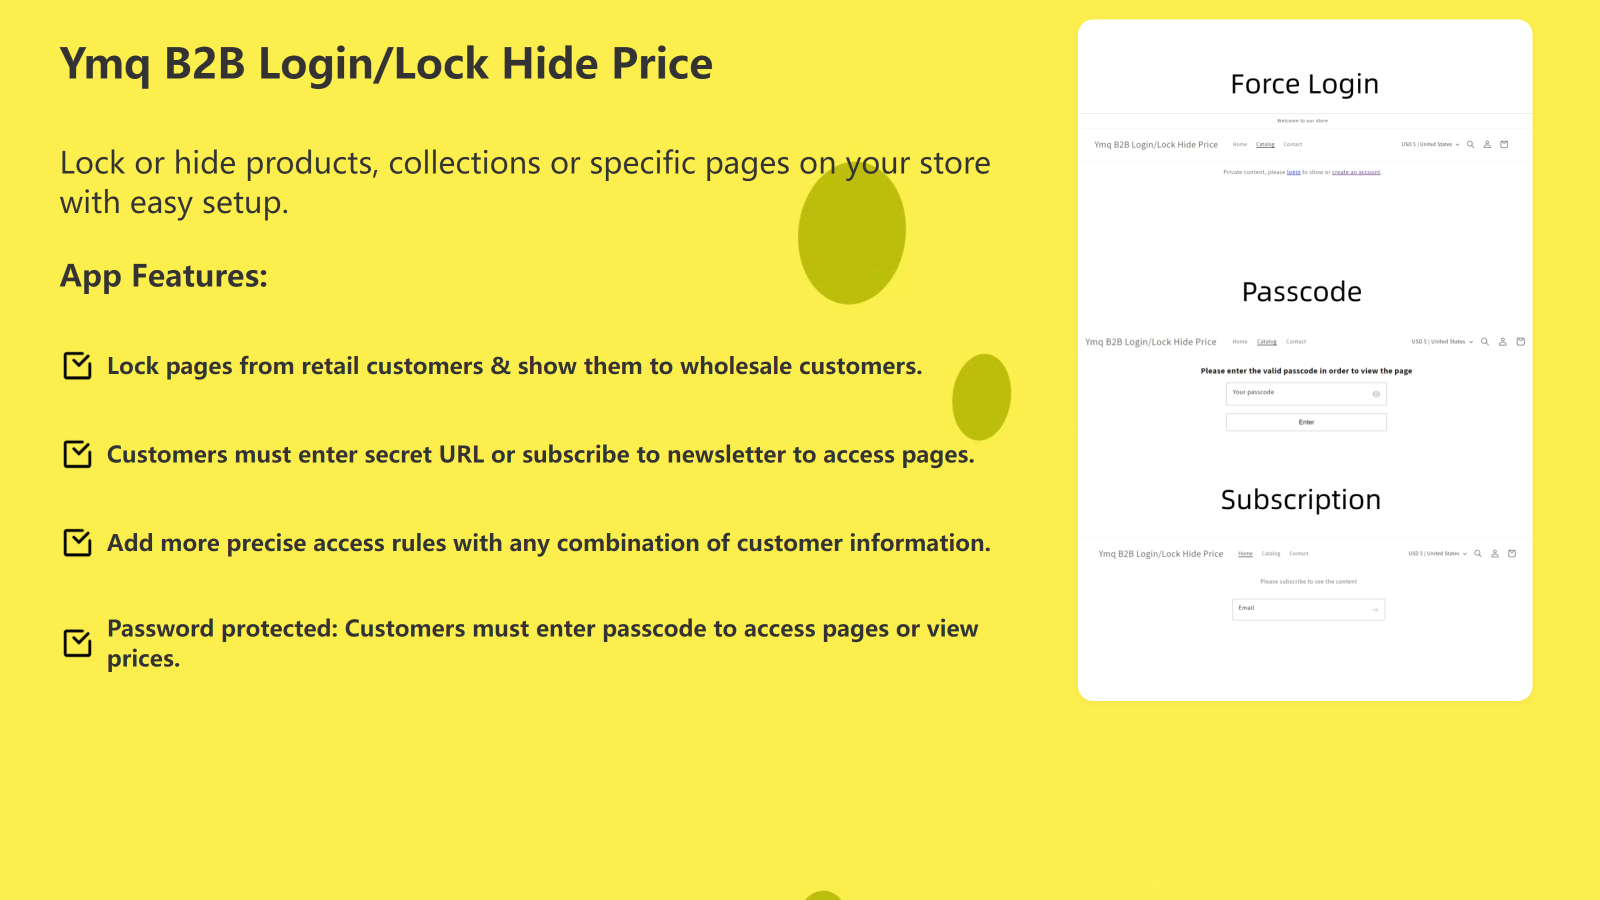 Ymq B2B Login/Lock Hide Price Screenshot